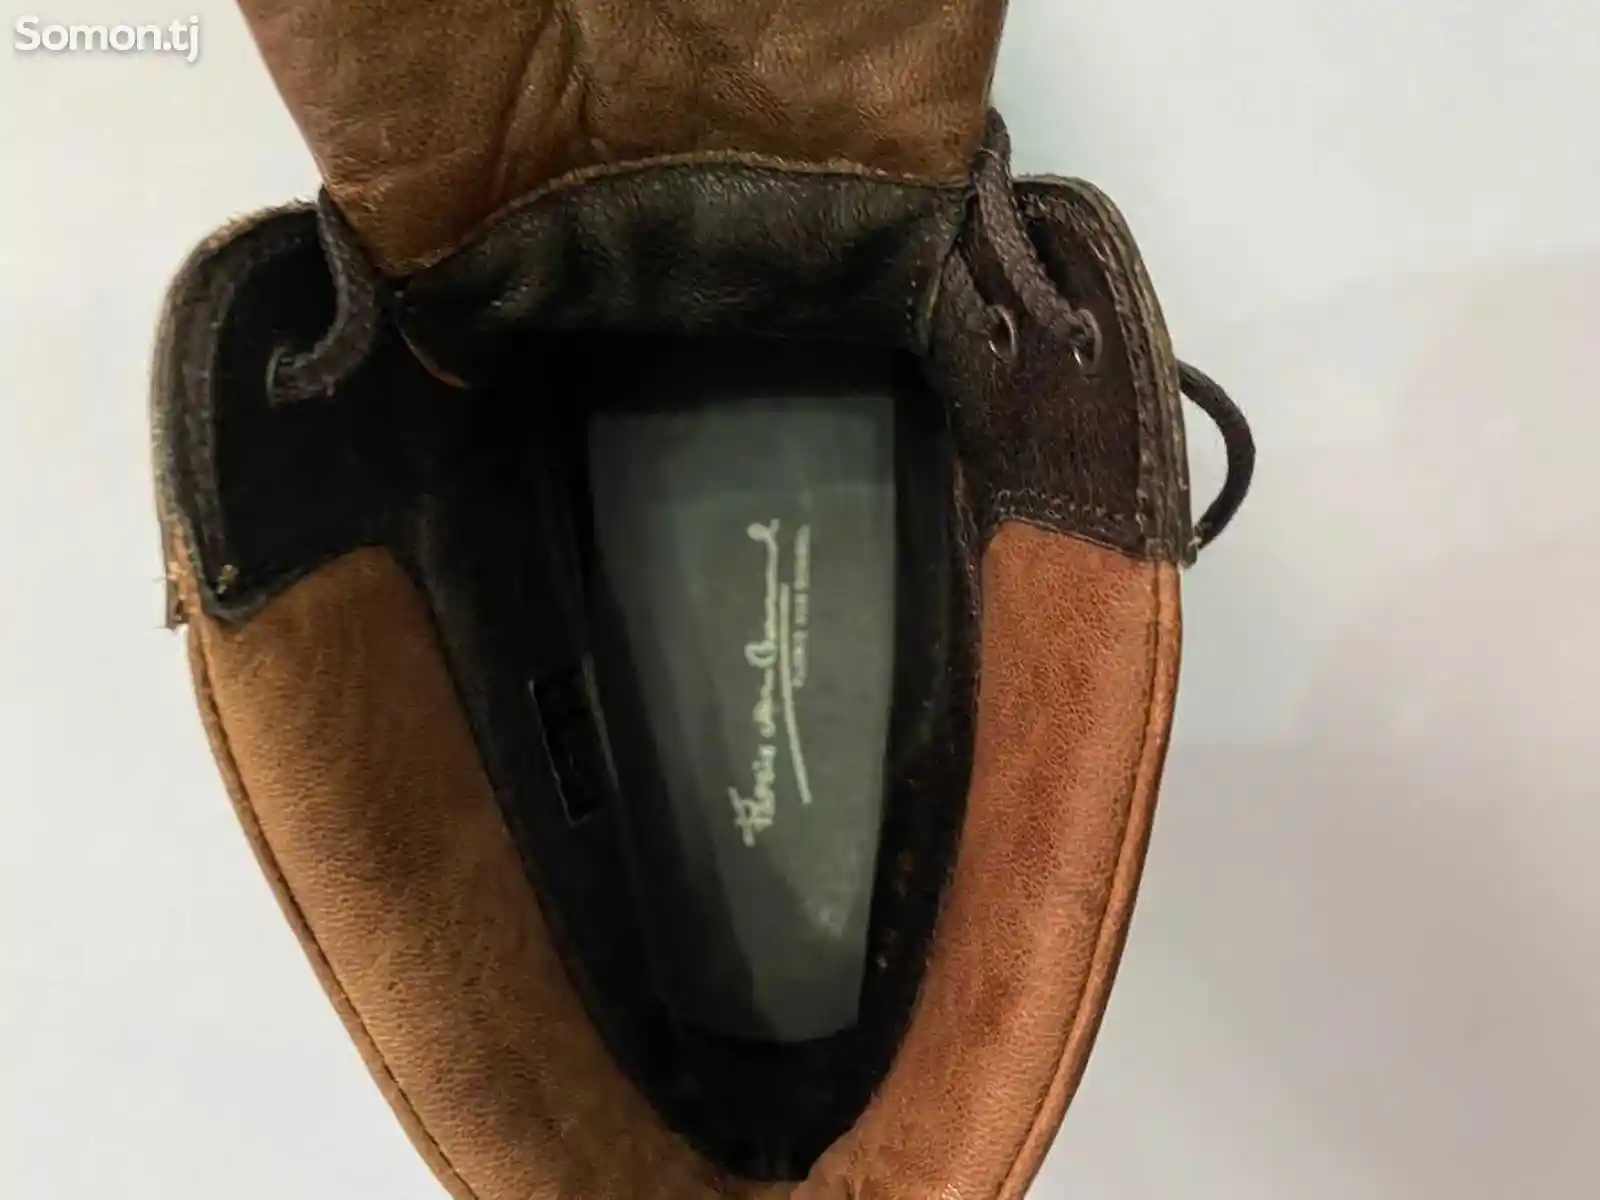 Сапоги муза туфли мардона мужской обувьVan Bommel-5